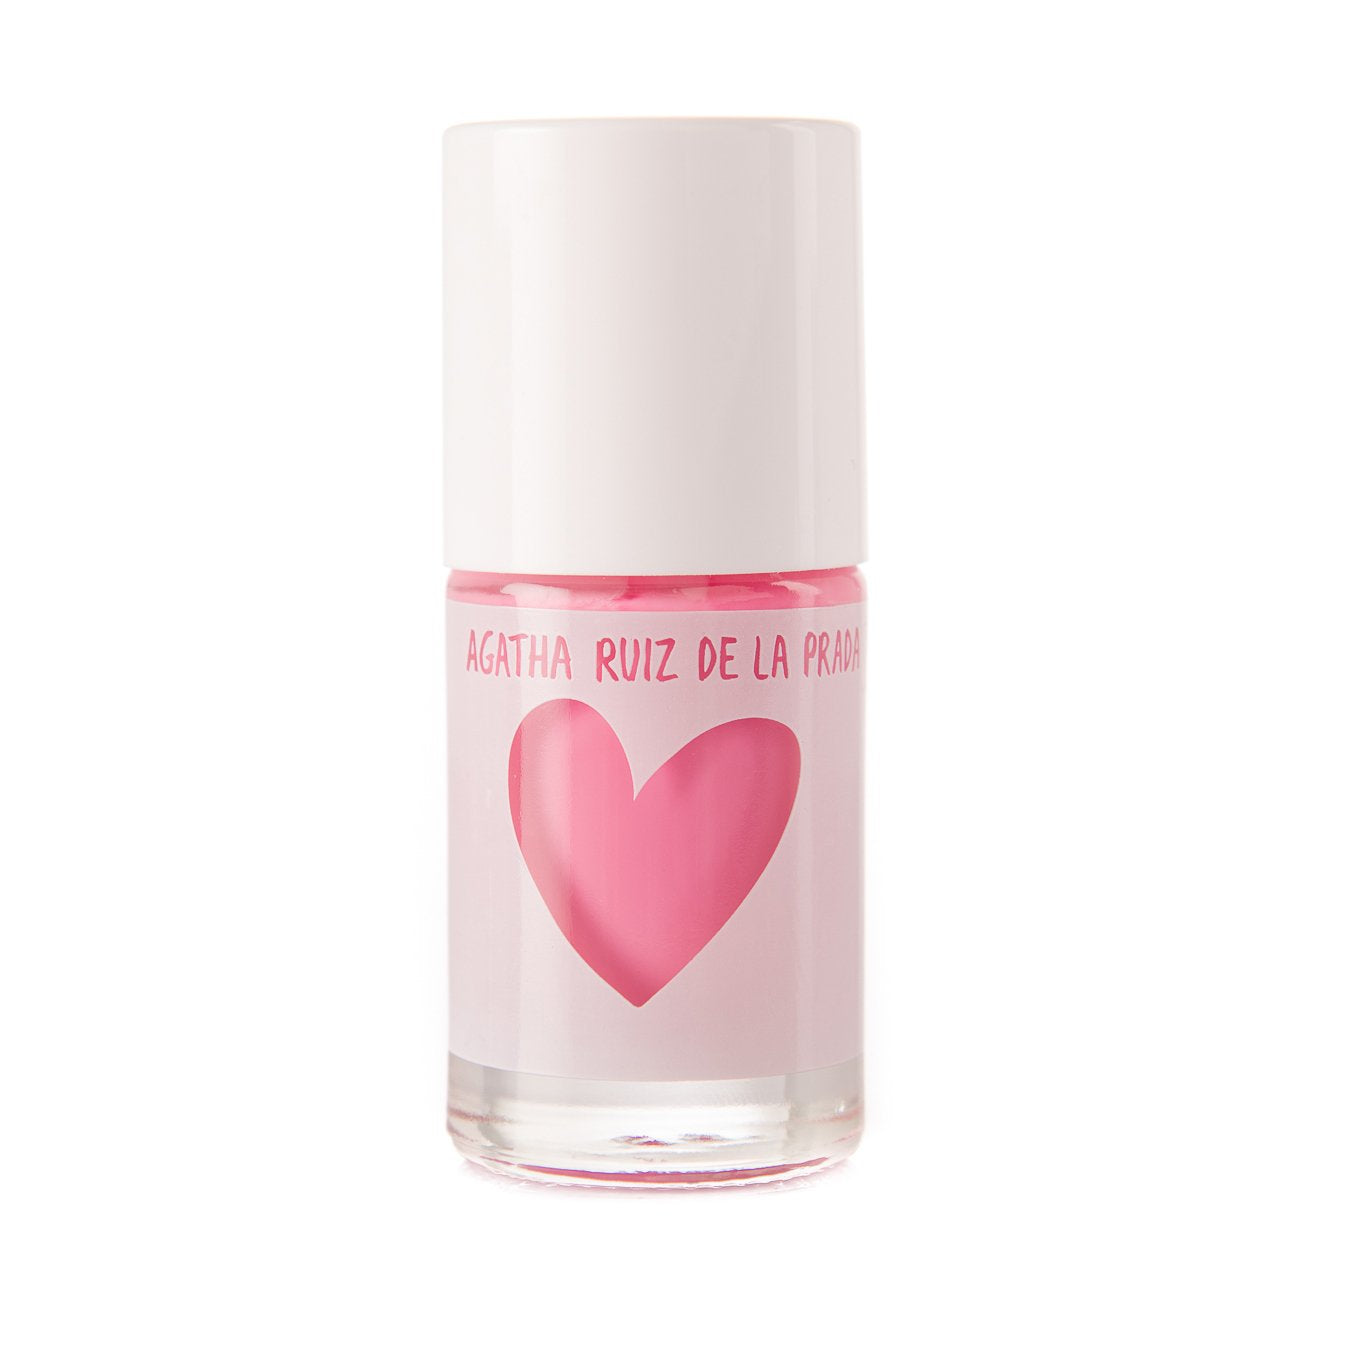 Agatha Ruiz de la Prada Nail Polish Bottle Pink